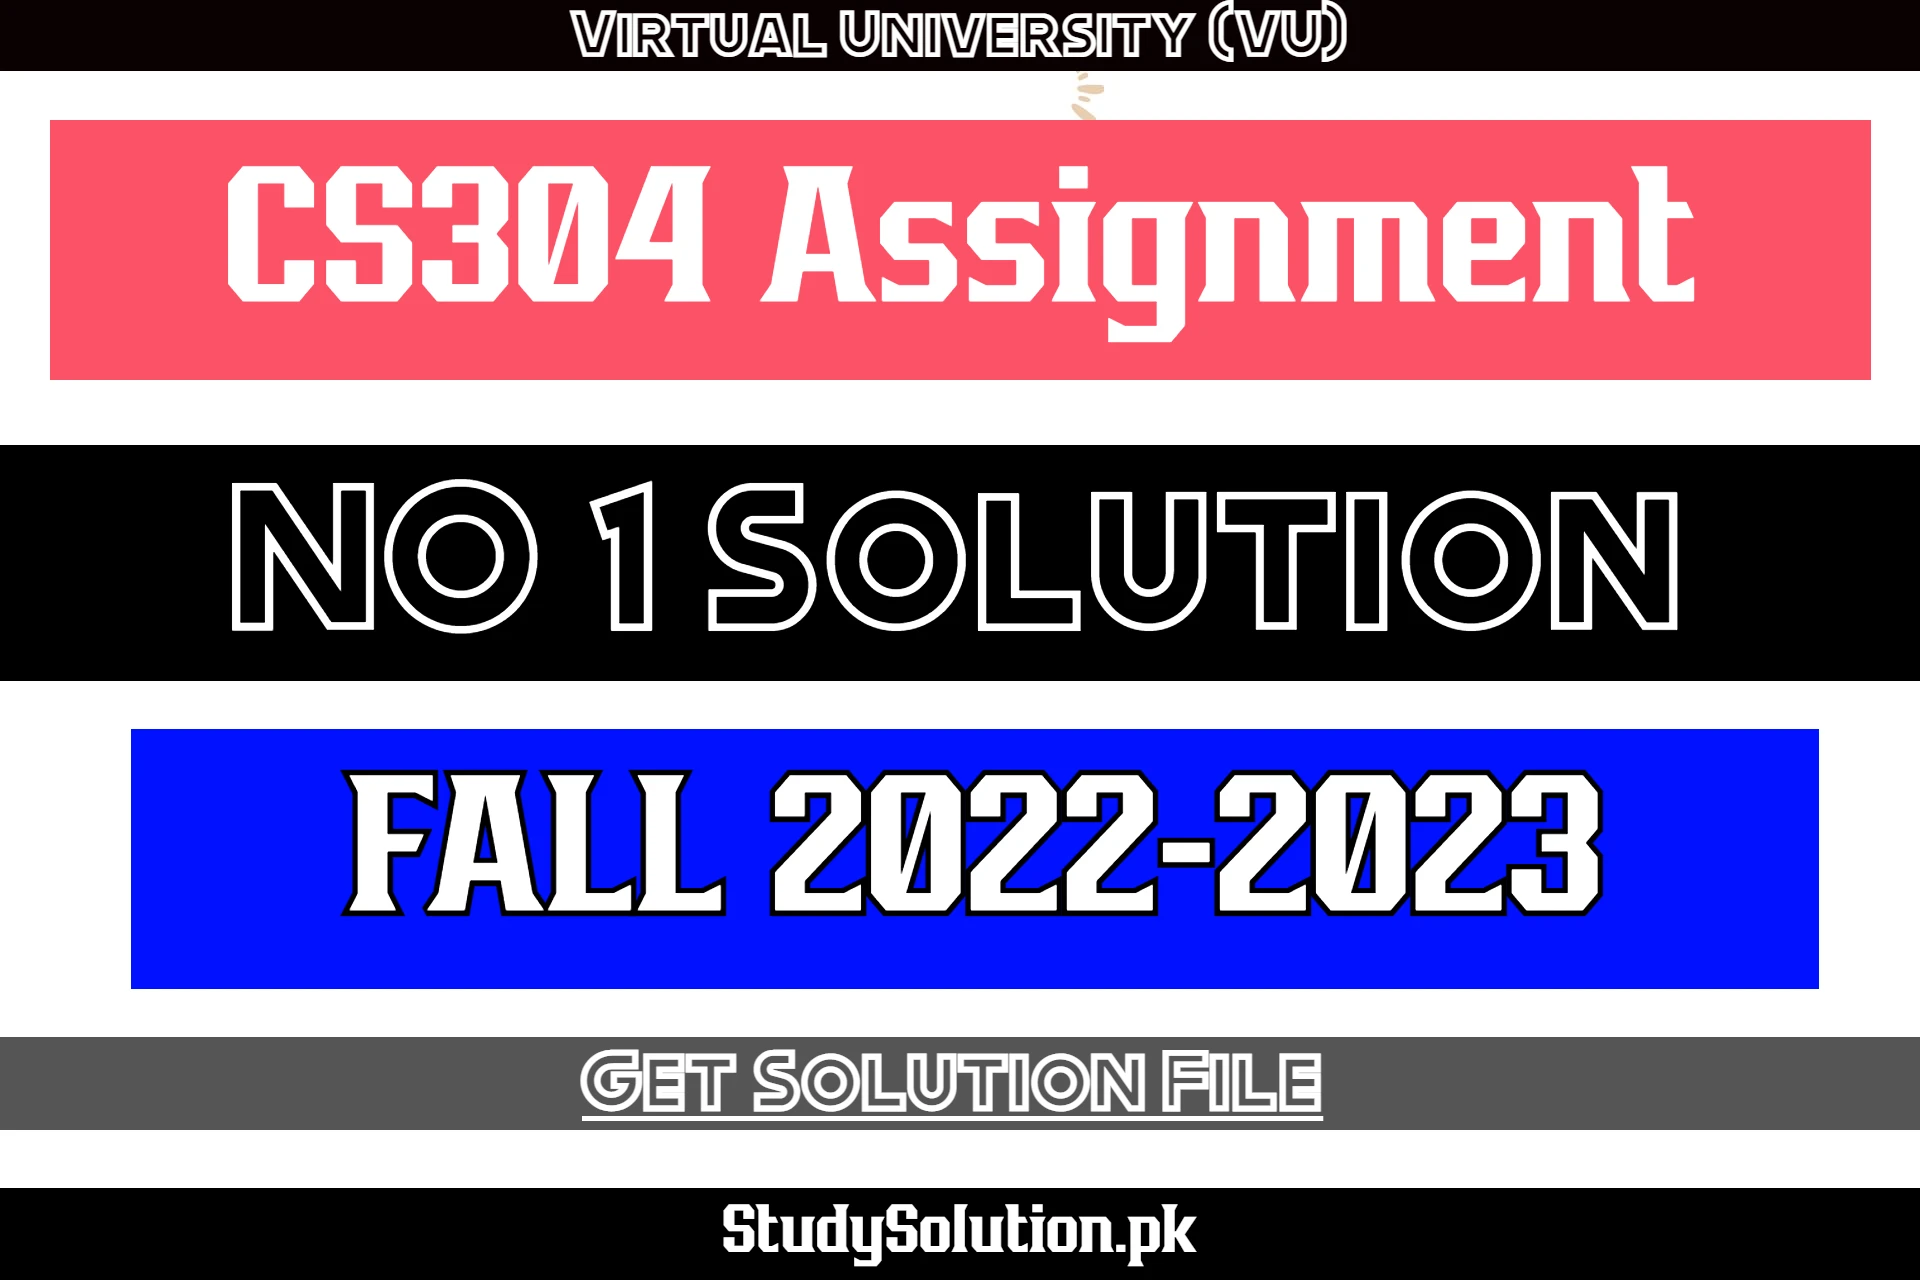 CS304 Assignment No 1 Solution Fall 2022